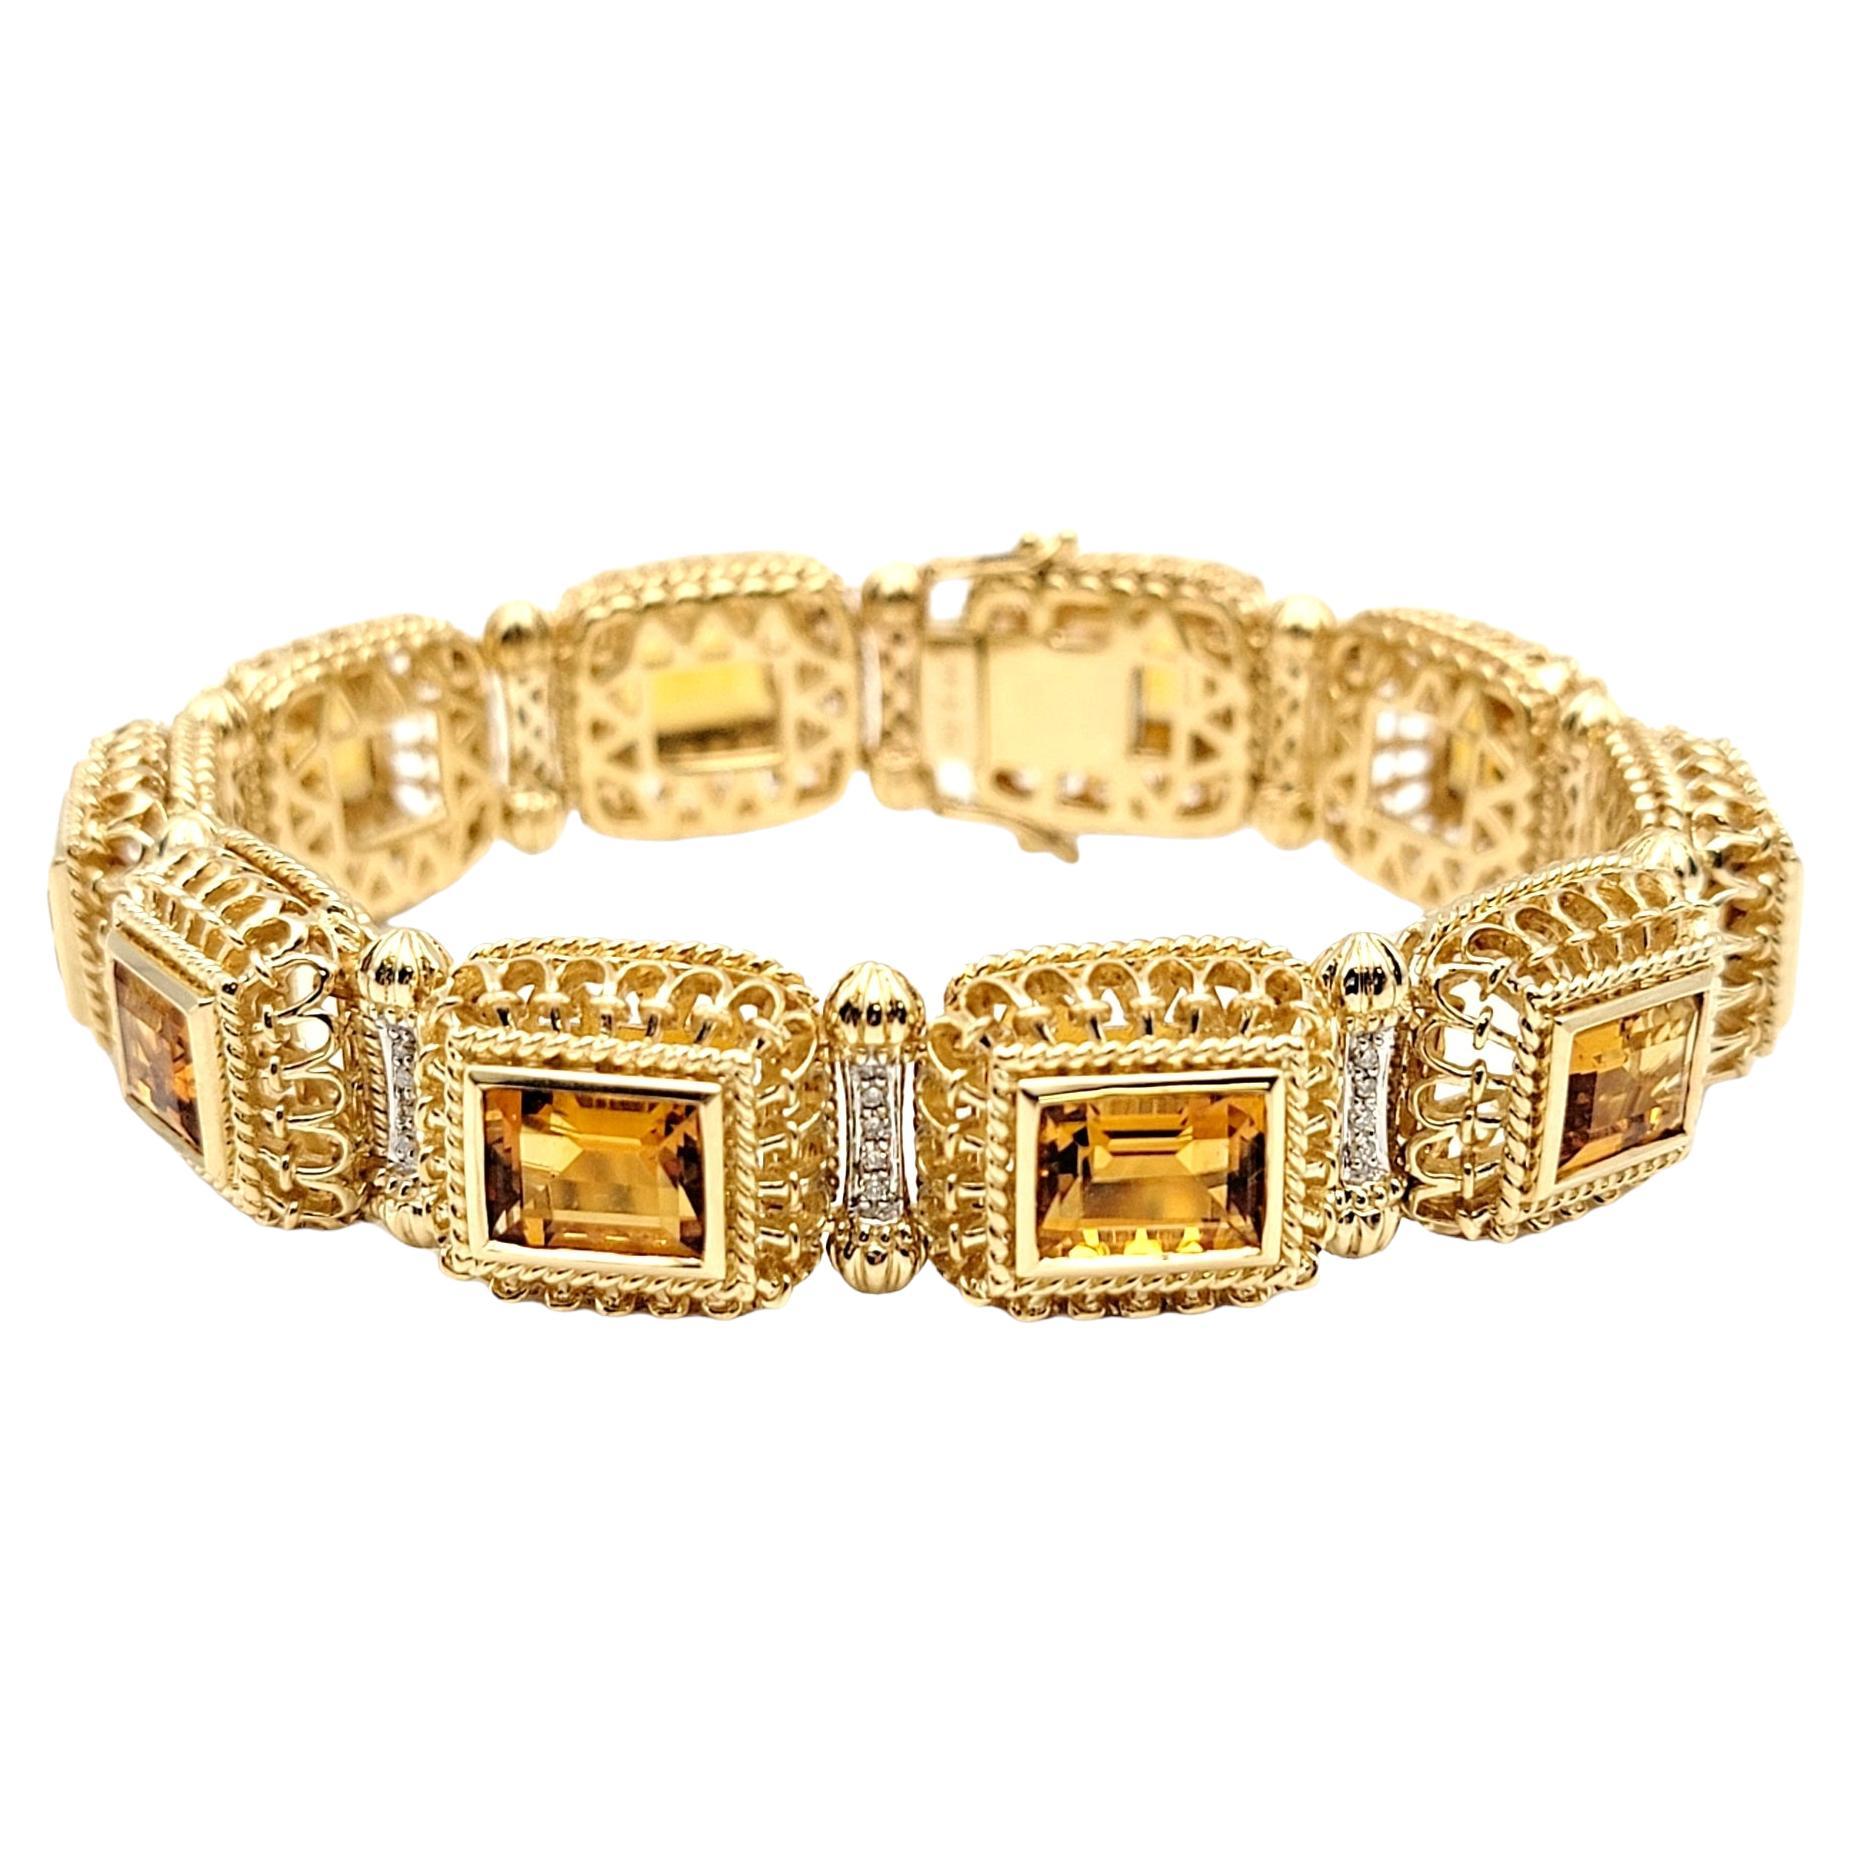 Rectangular Step Cut Citrine and Diamond Ornate Link Bracelet in 14 Karat Gold